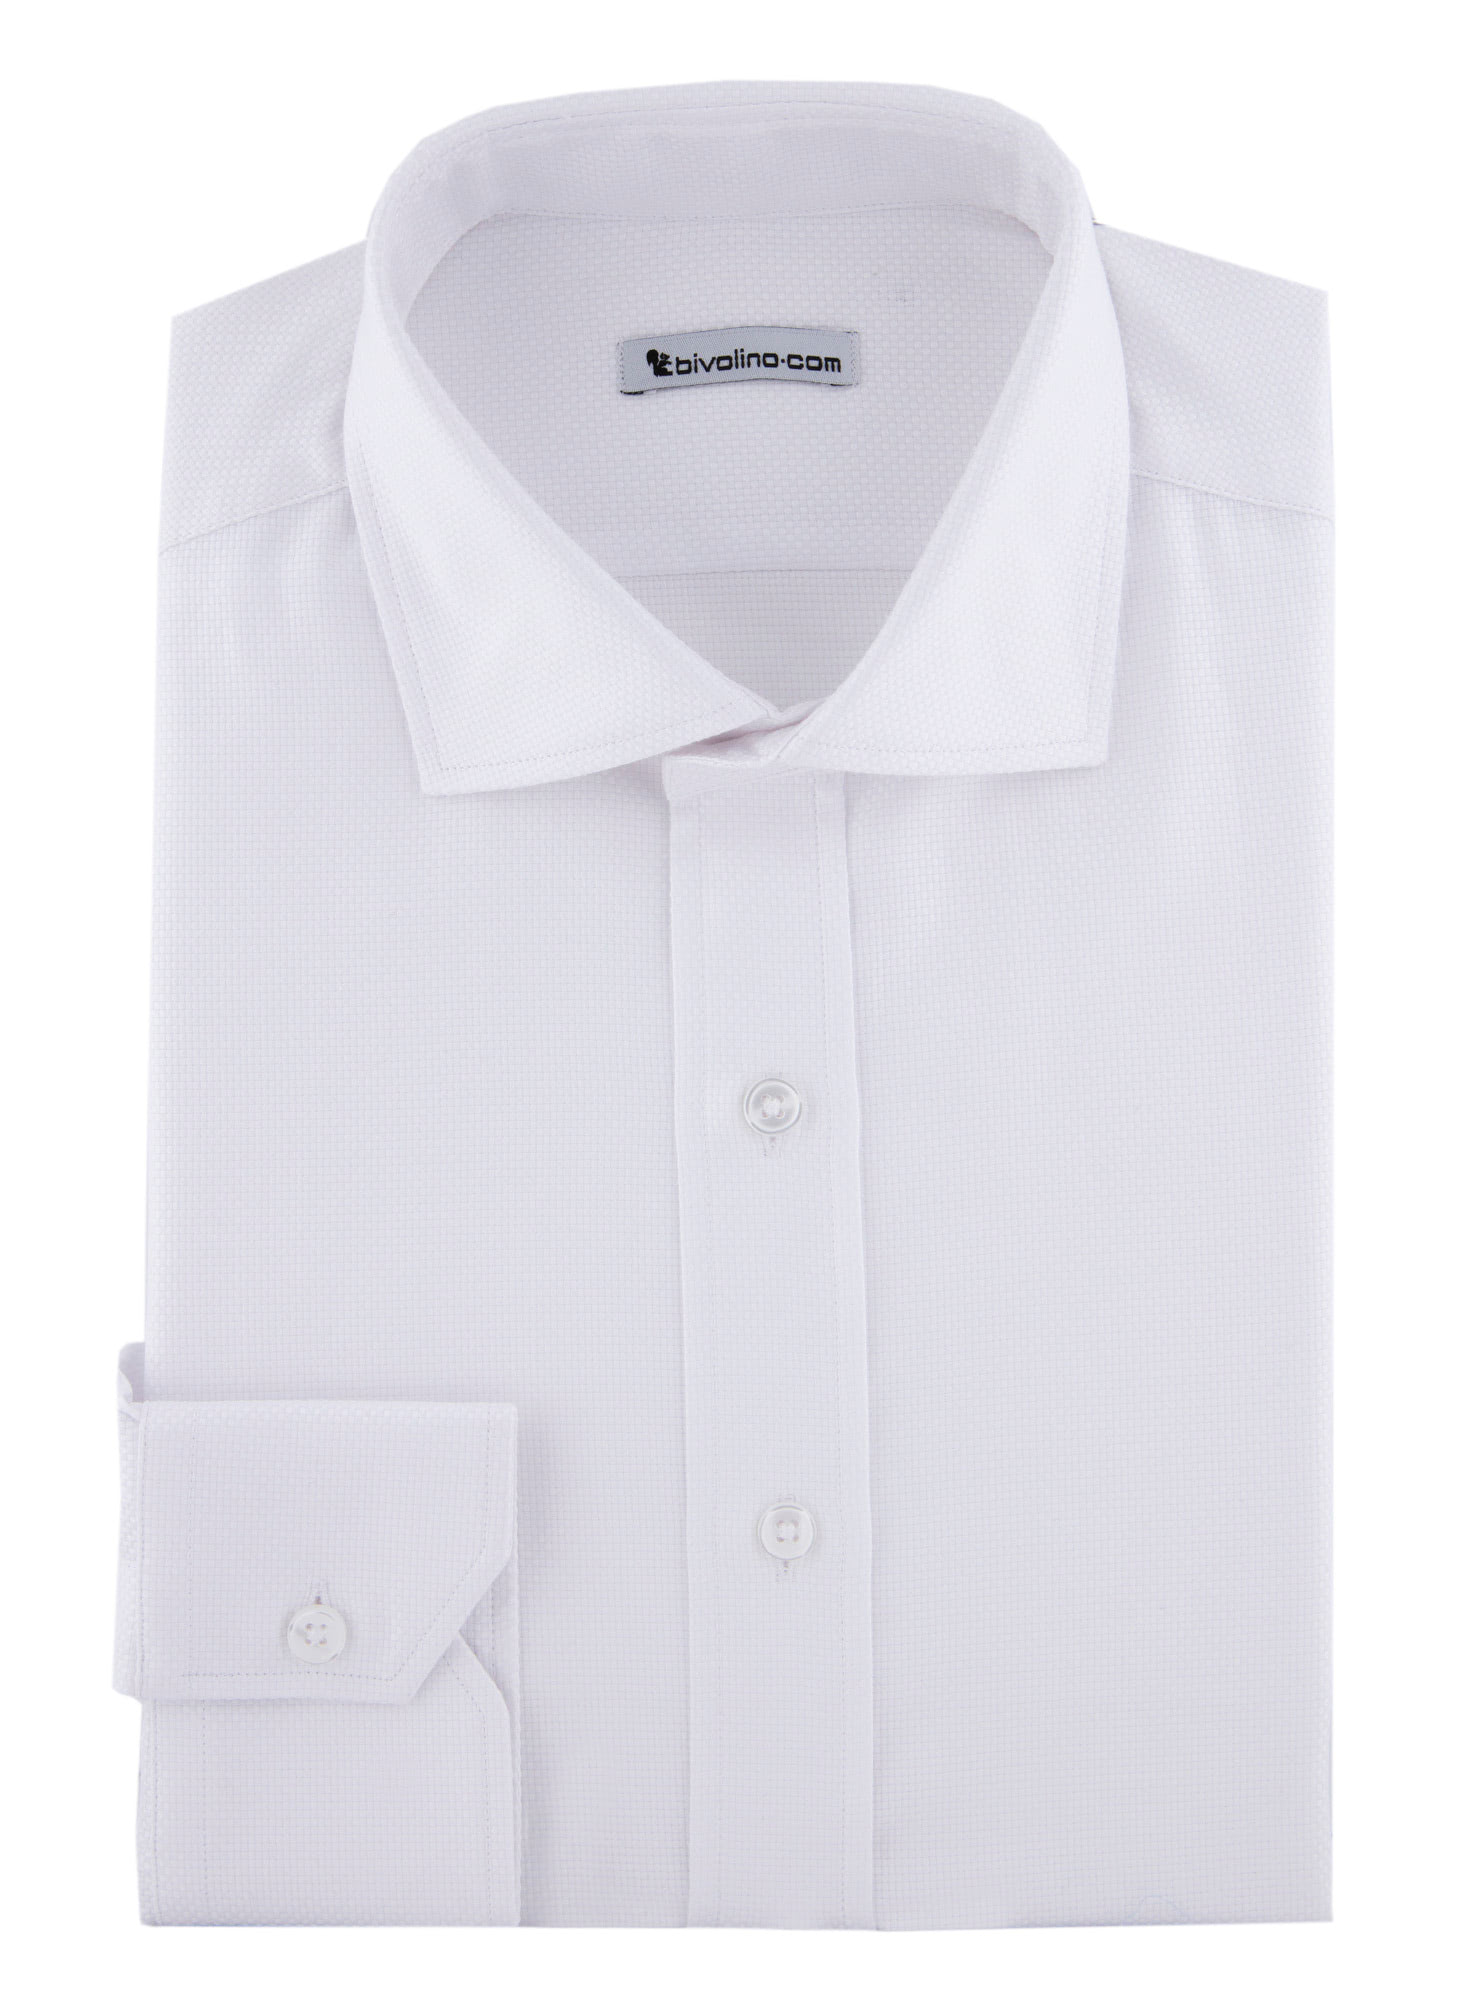 ORGIANO - Camisa oxford dobby blanco real - BEDFORD 1